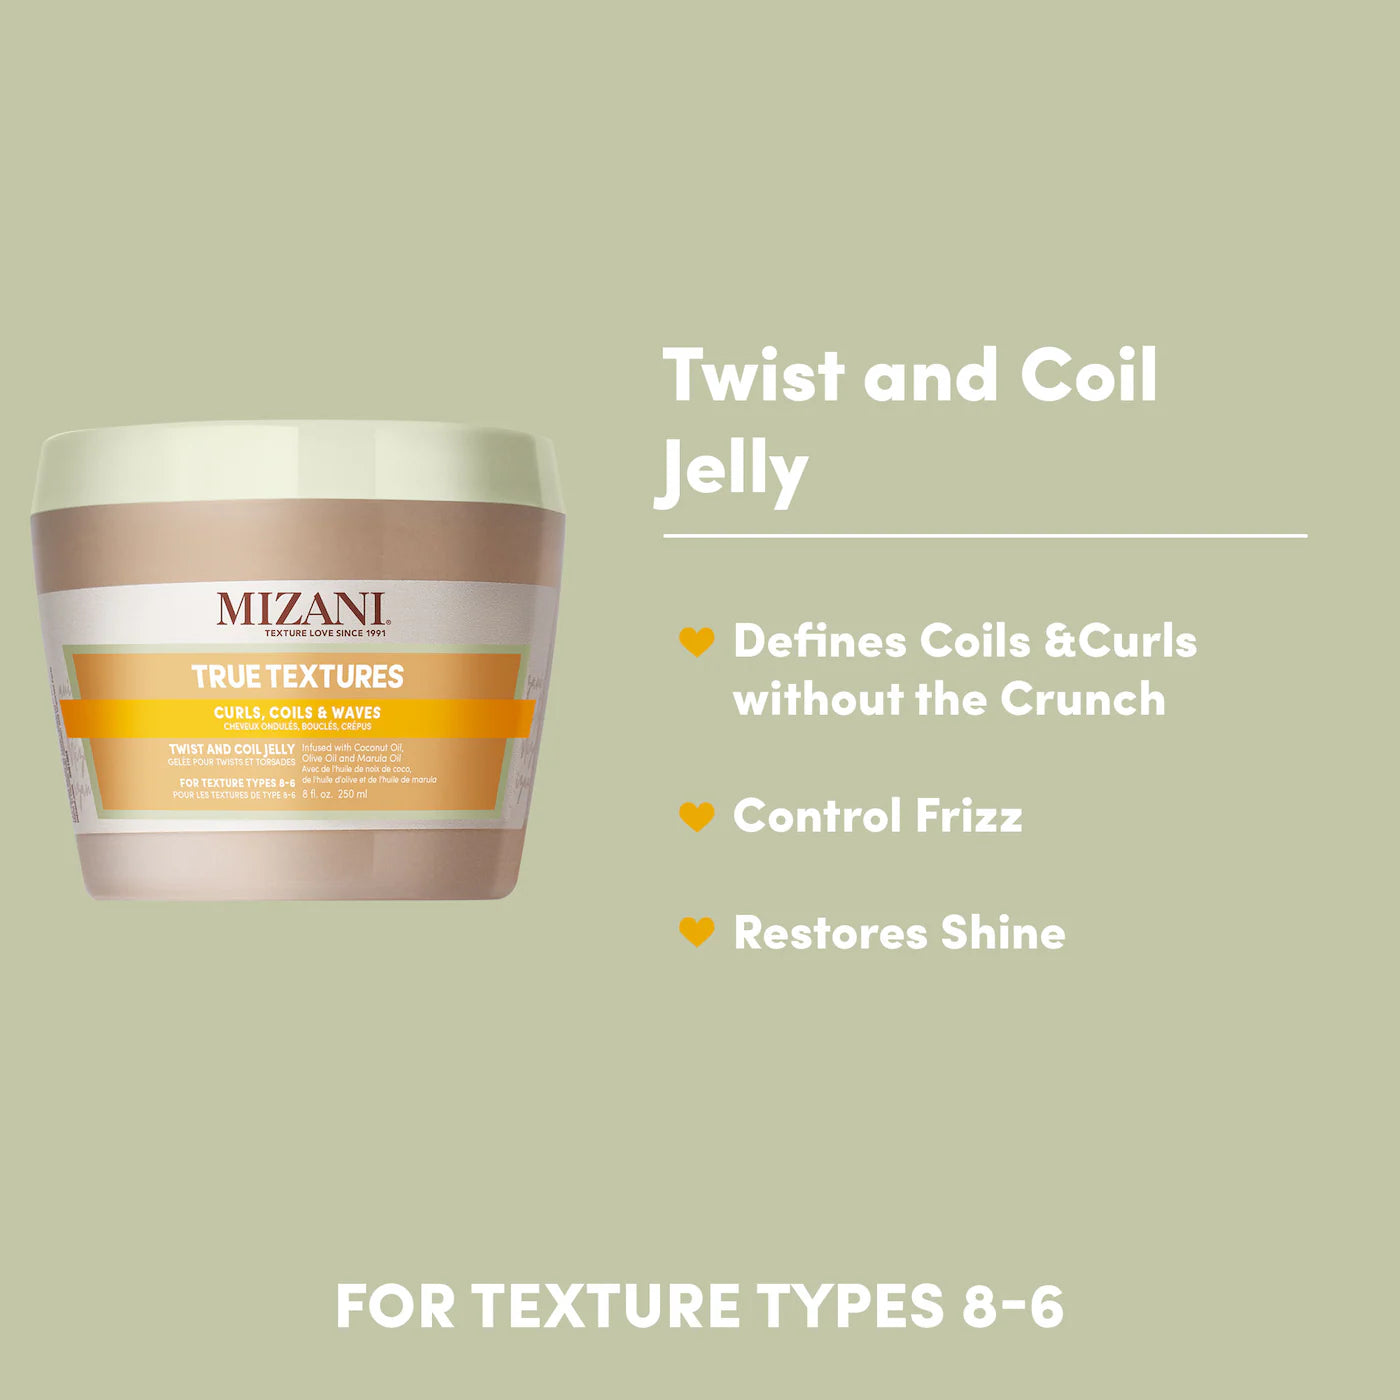 MIZANI True Textures Twist and Coil Jelly